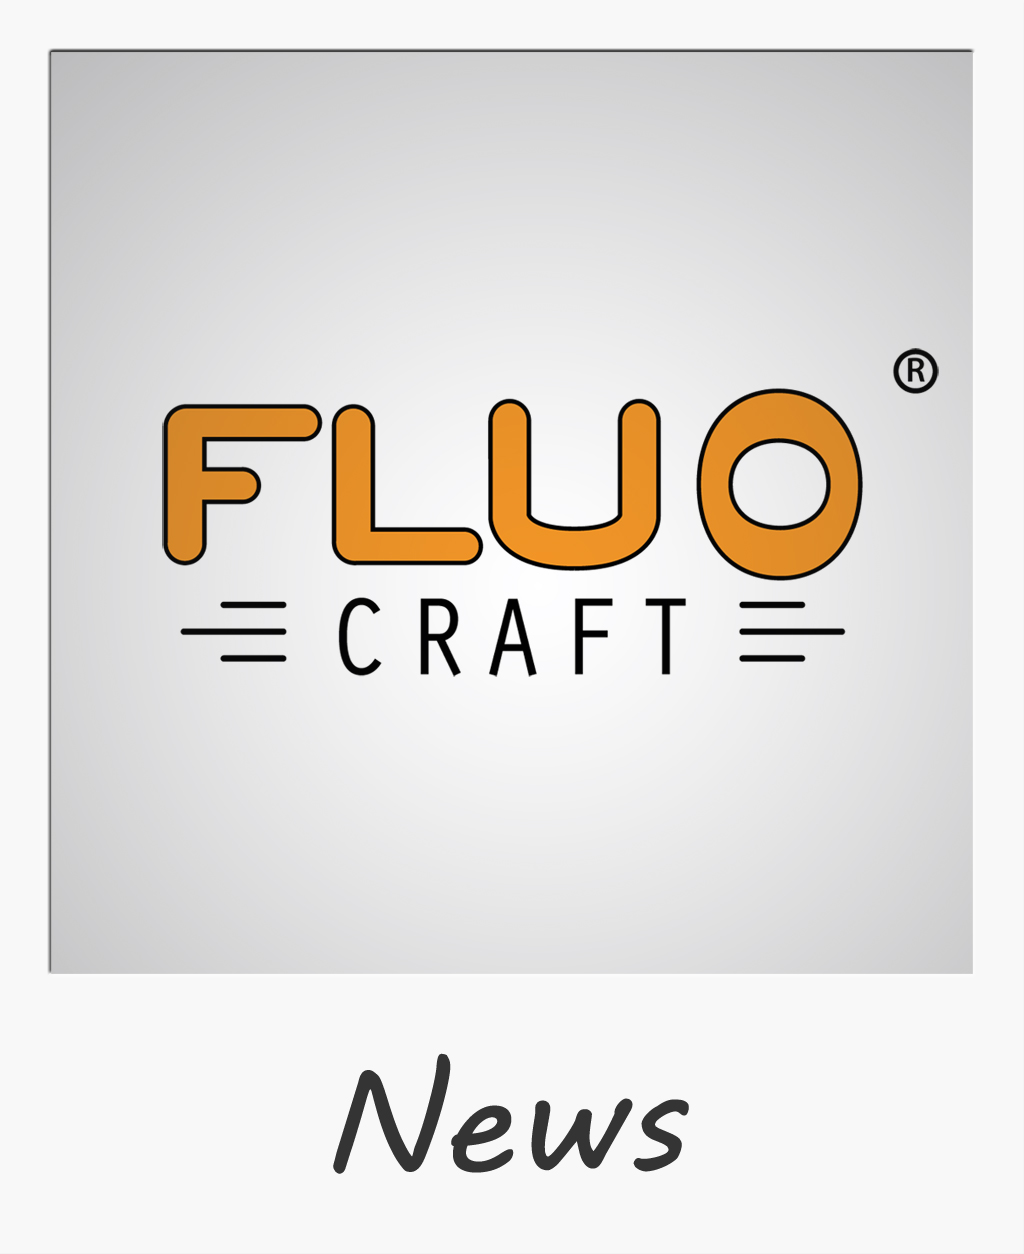 FC polas news fluo craft